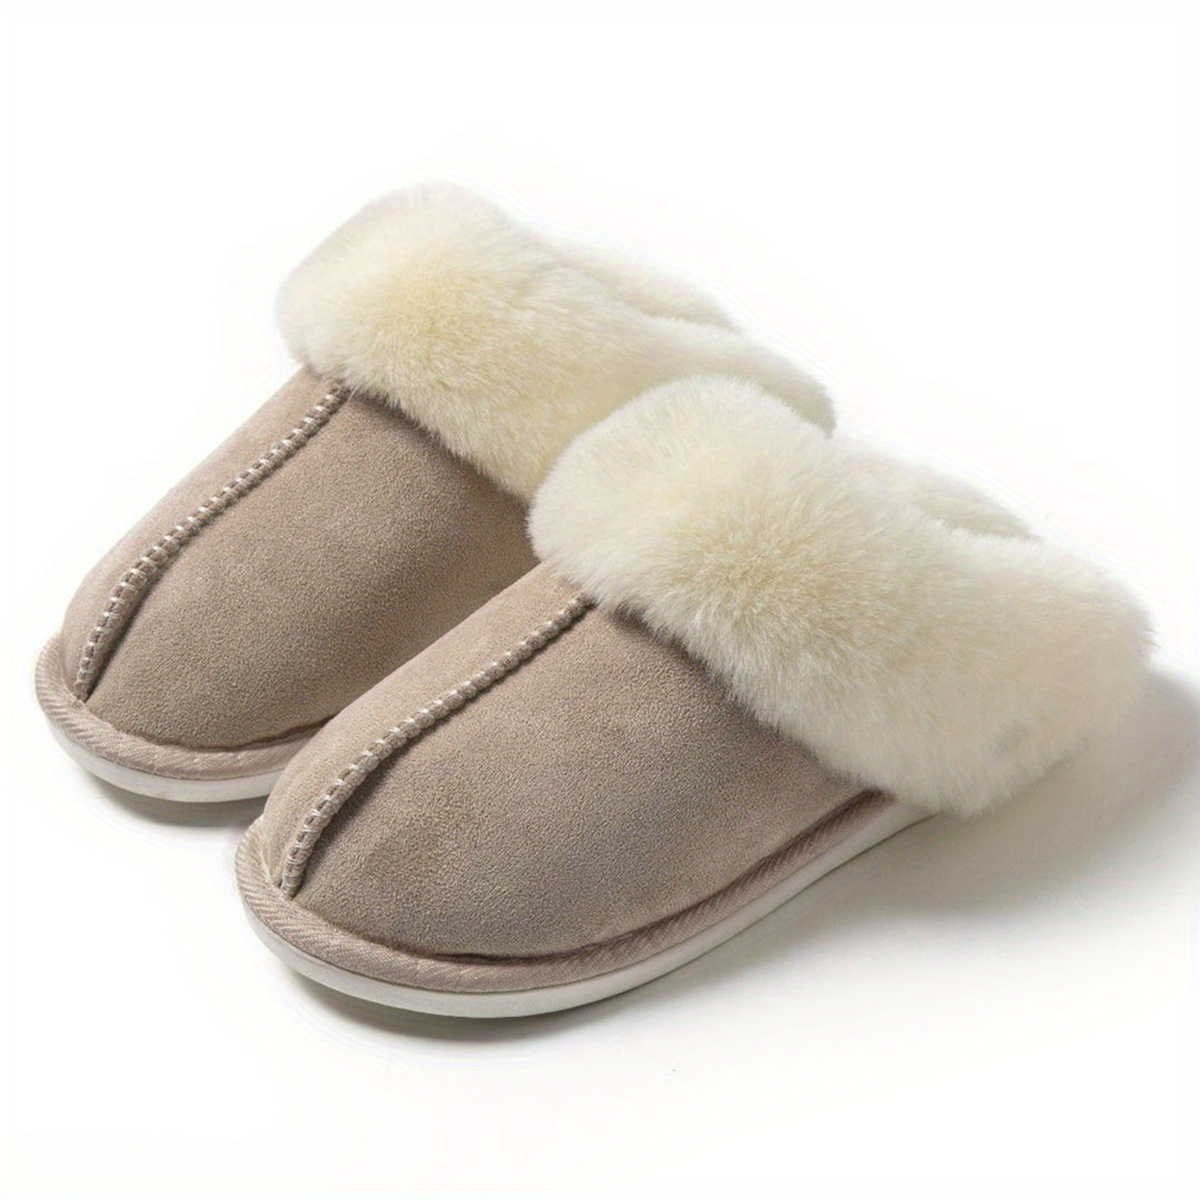 Women's Fluffy Furry Slipper Boots, Comfortable Closed Toe Slip On